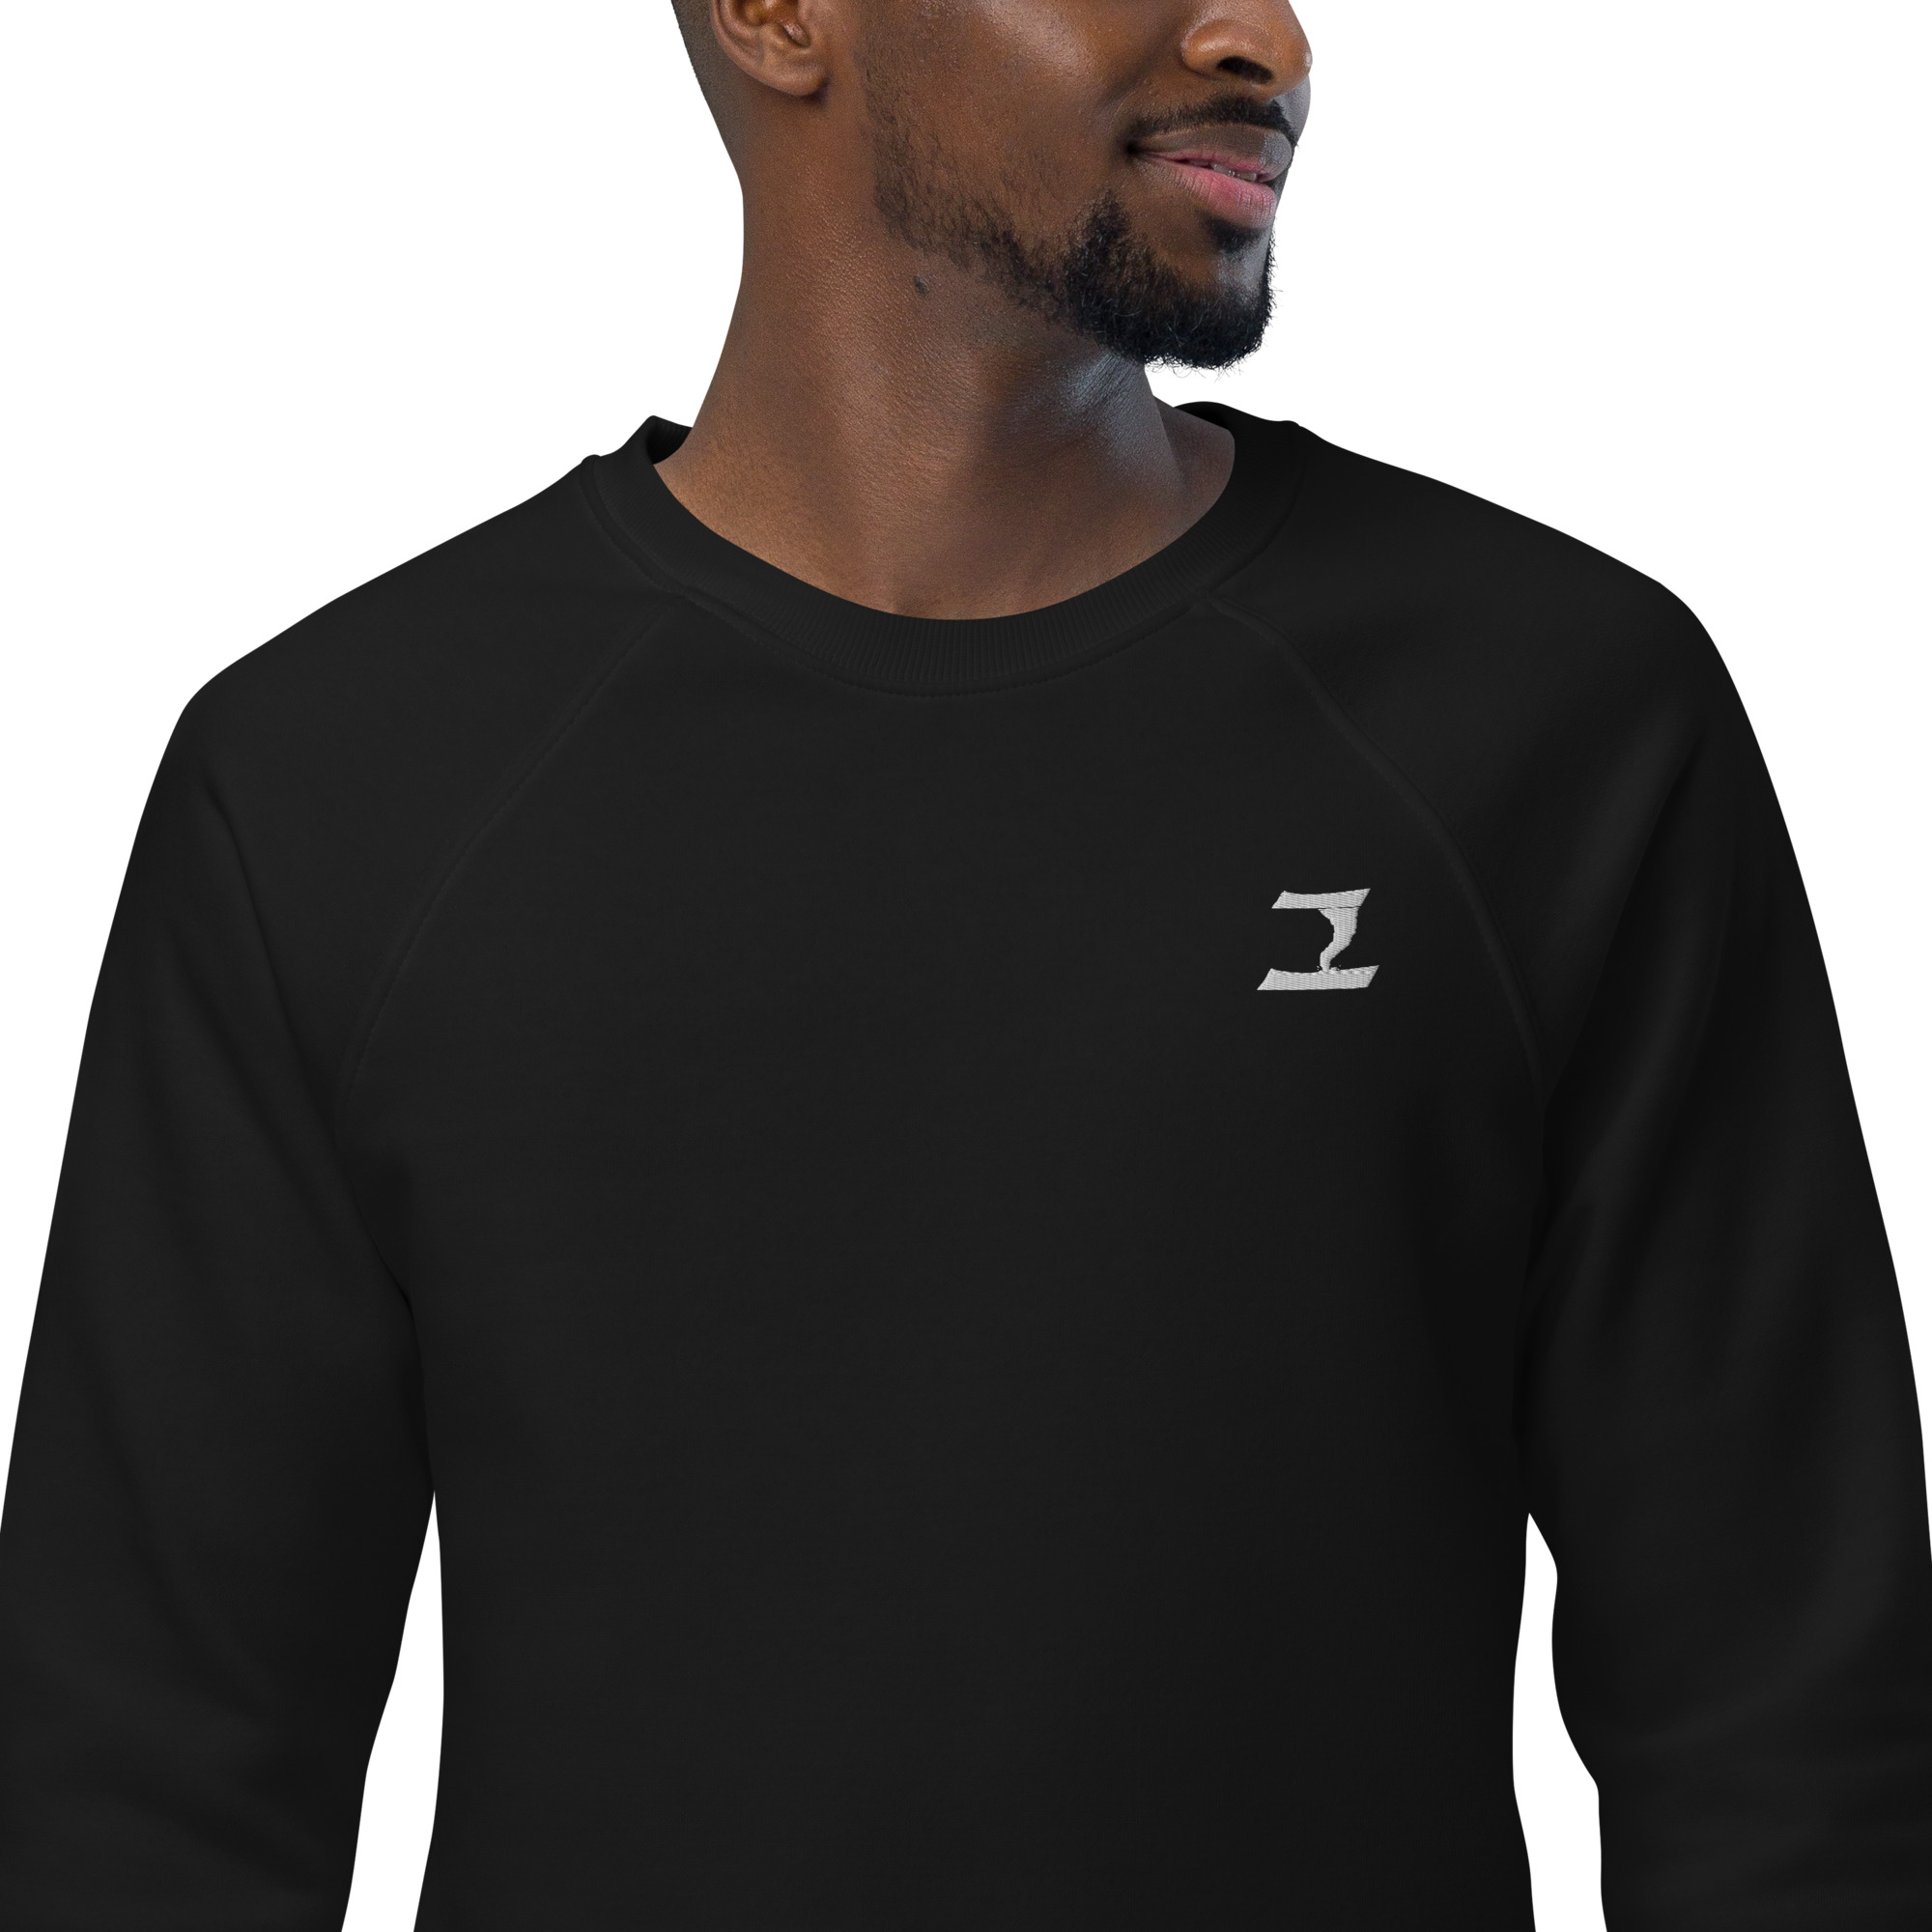 unisex-organic-raglan-sweatshirt-black-zoomed-in-6334e2624a743.jpg